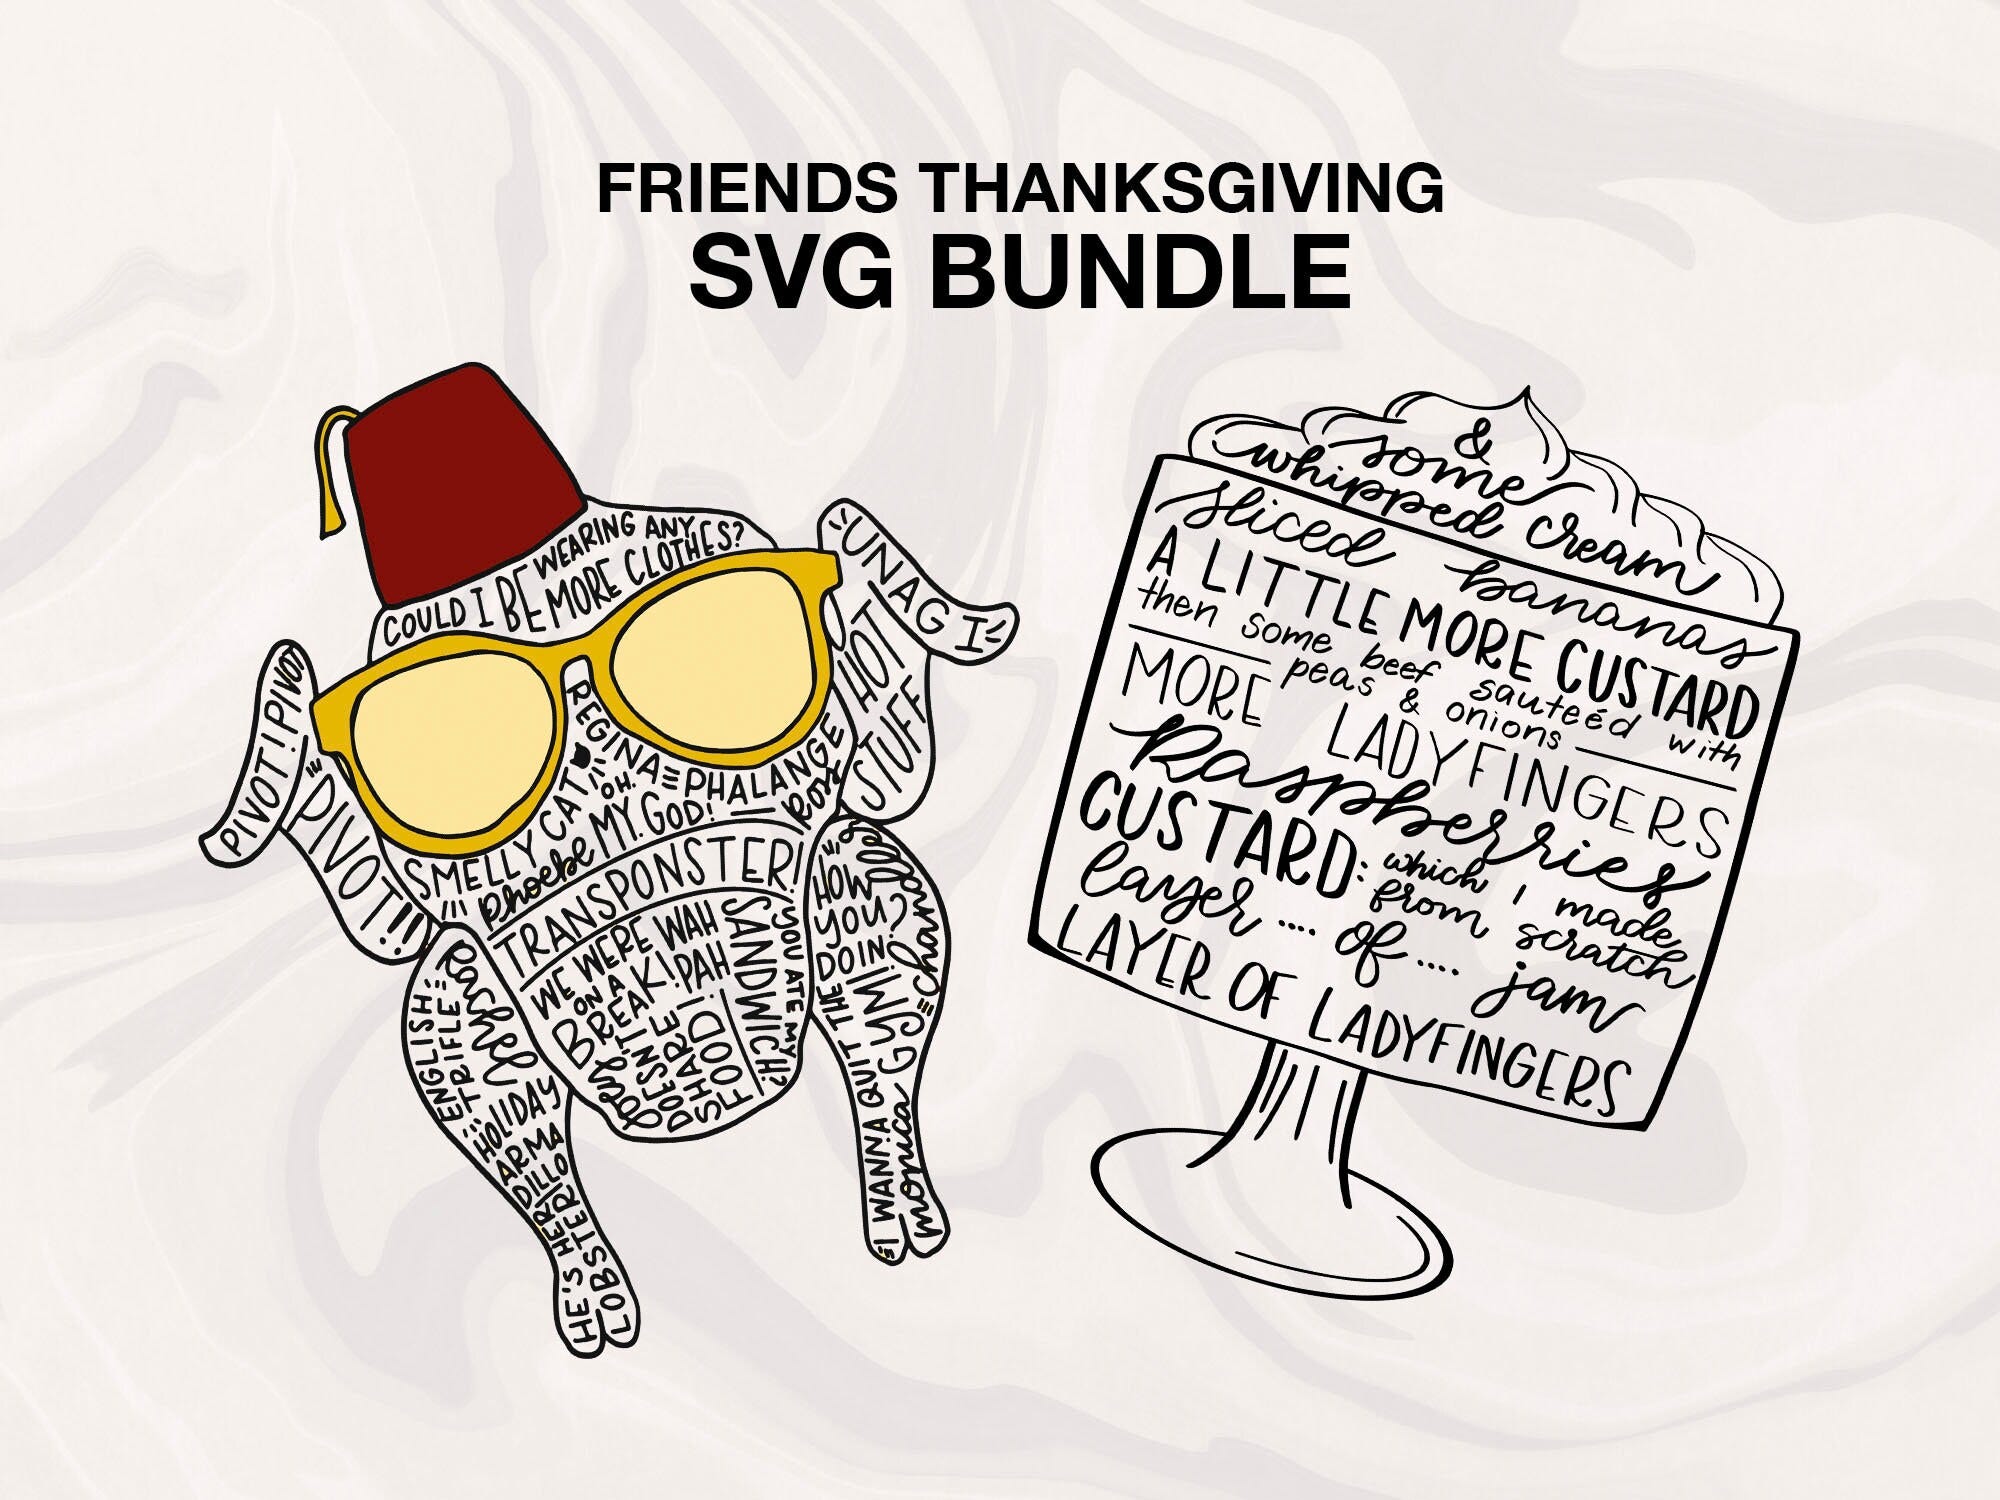 FRIENDS Thanksgiving SVG Bundle, Friends Traditional English Trifle, Friends Thanksgiving Turkey Cricut Vector Decal, Gift